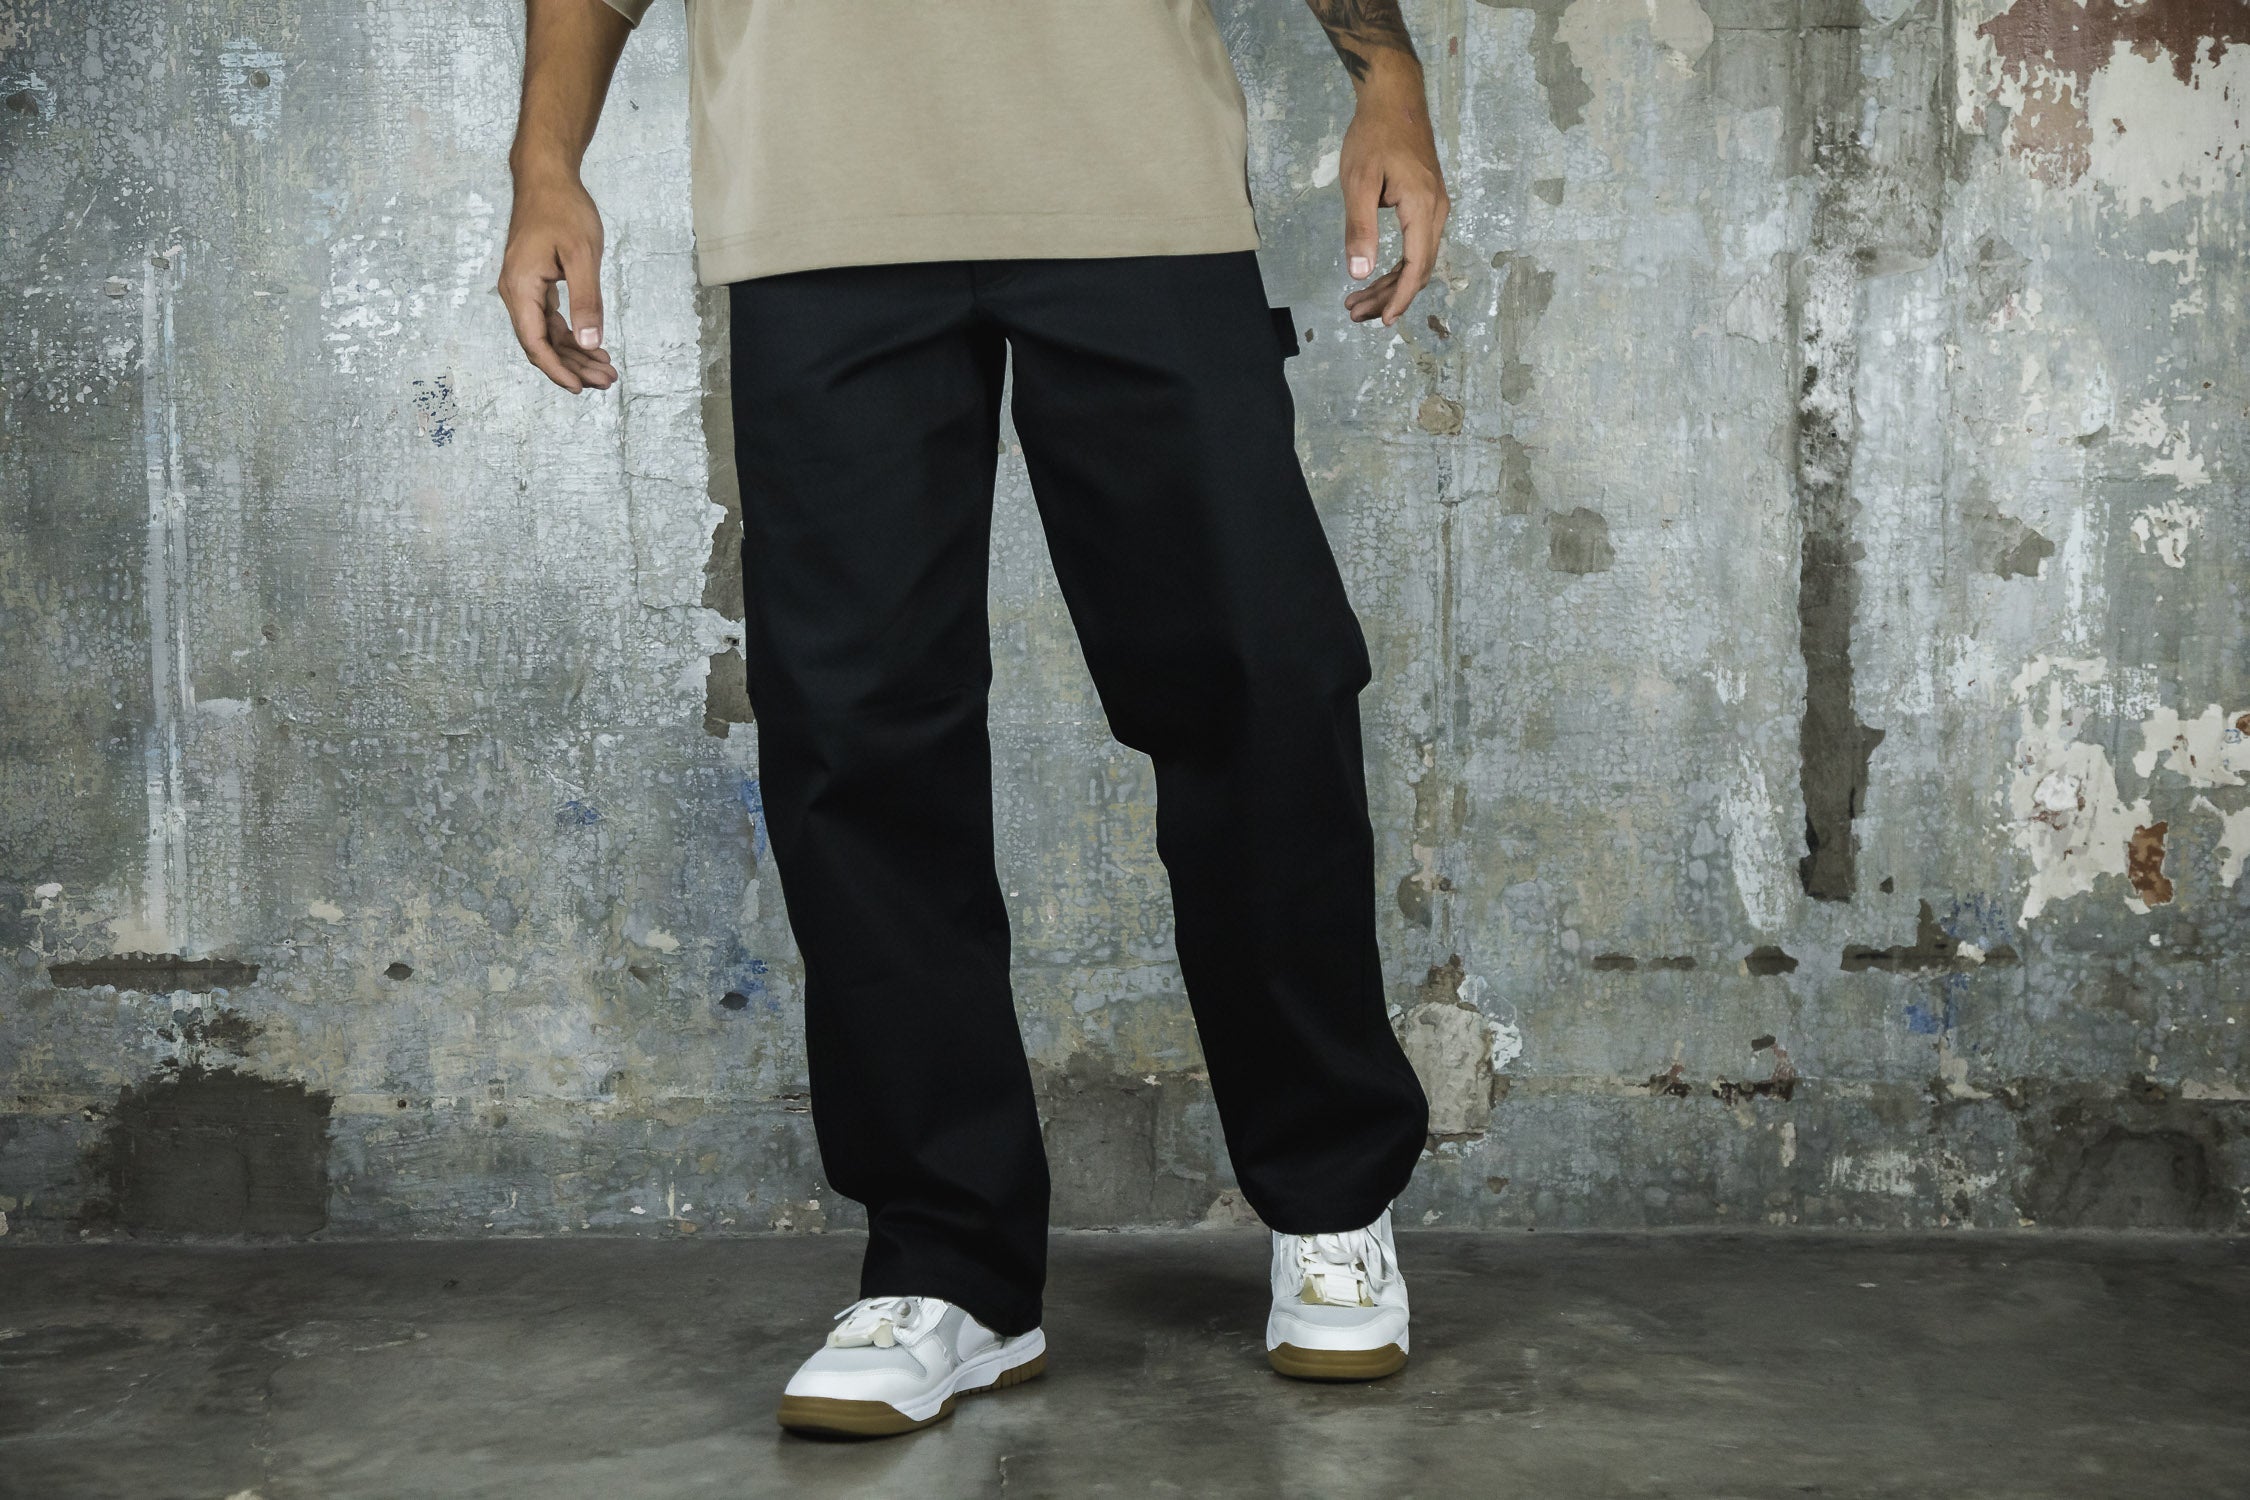 Nike Life Men's Carpenter Pants.